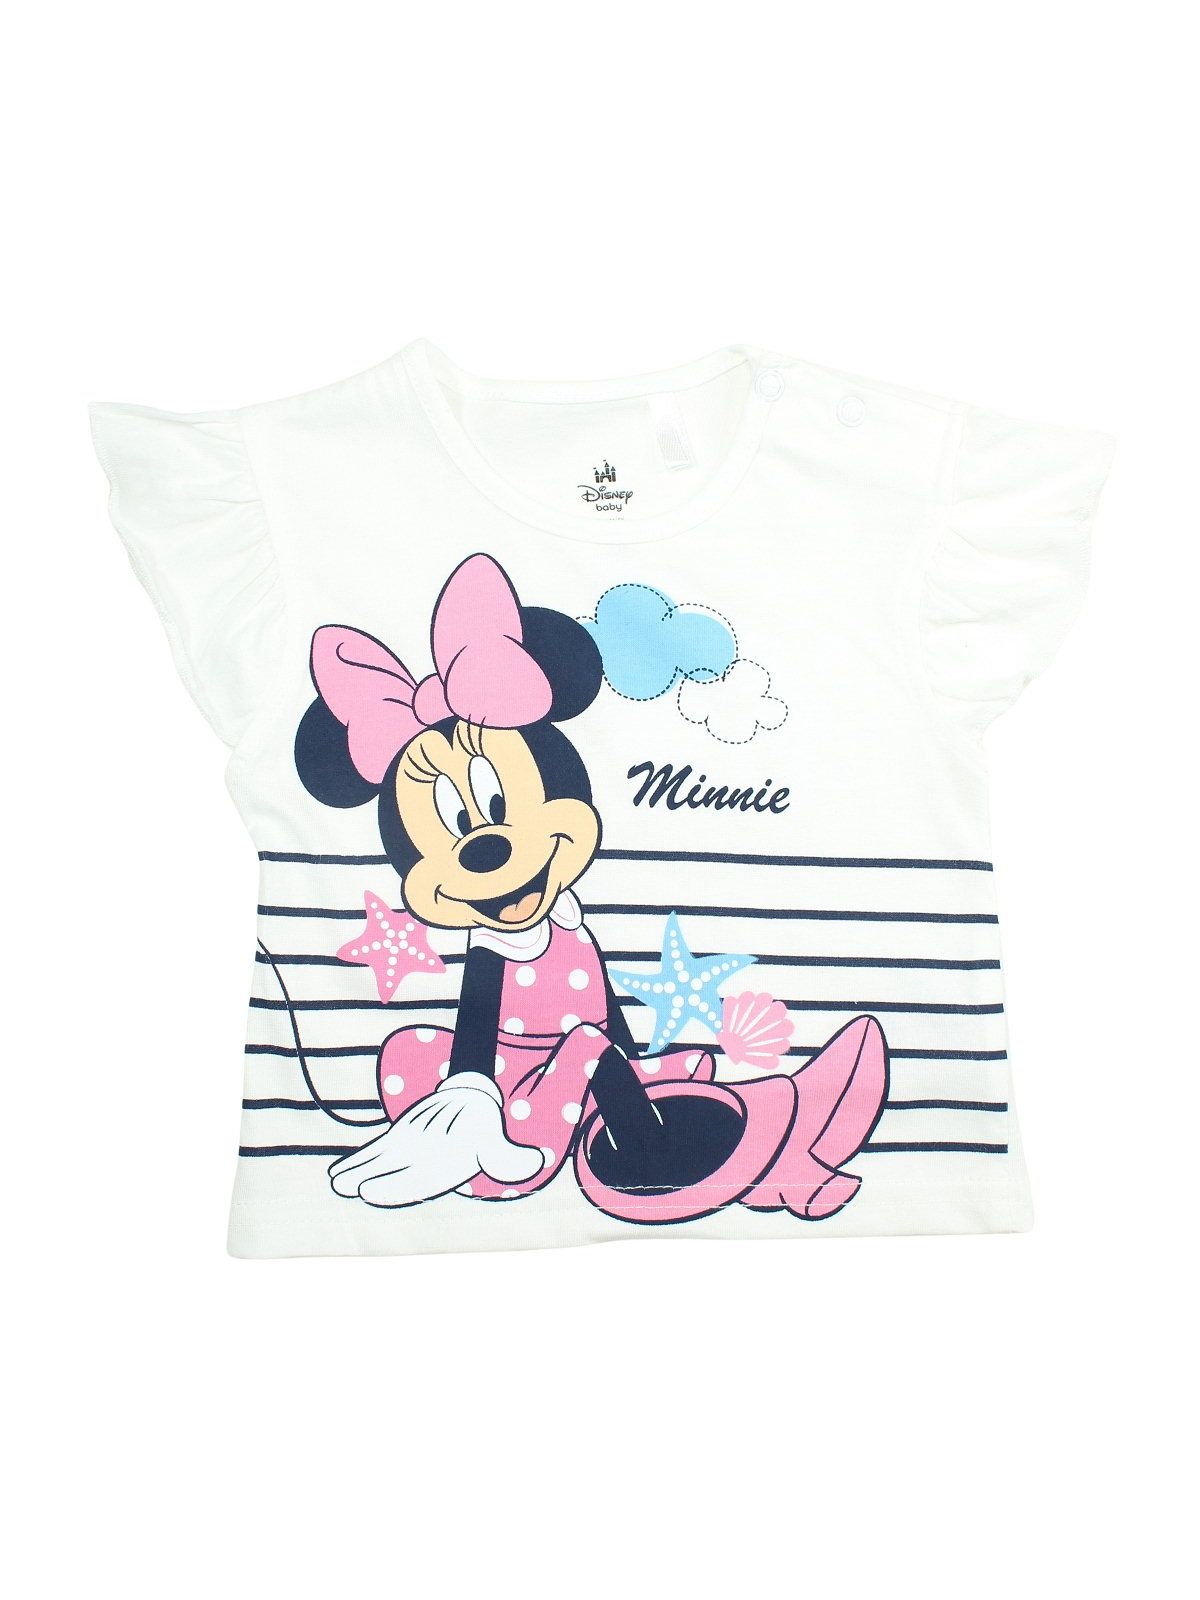 Minnie-Baby-Set.